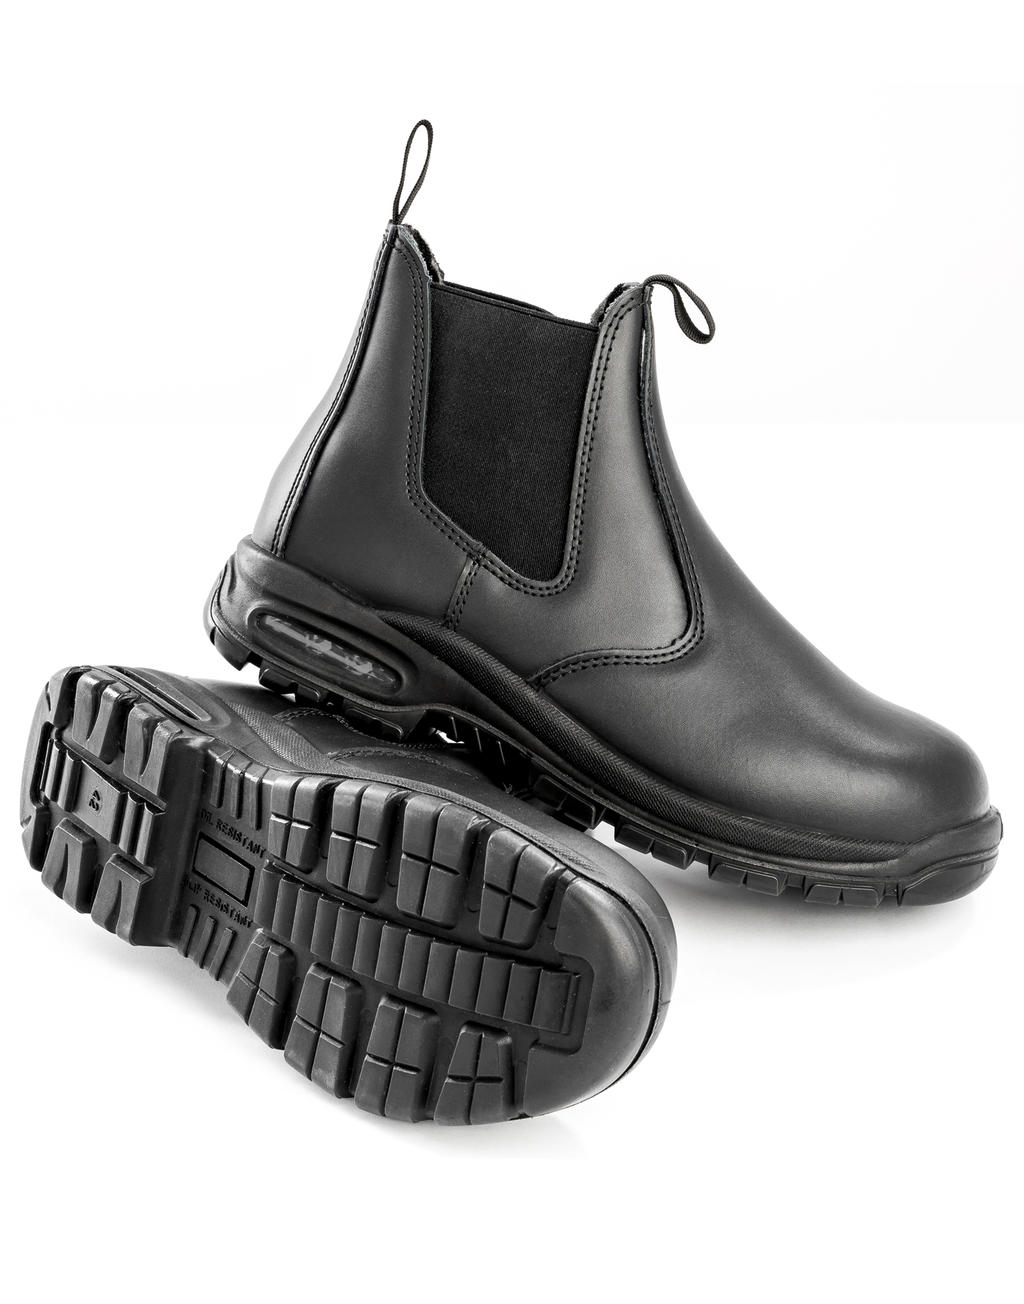  Kane Safety Dealer Boot in Farbe Black